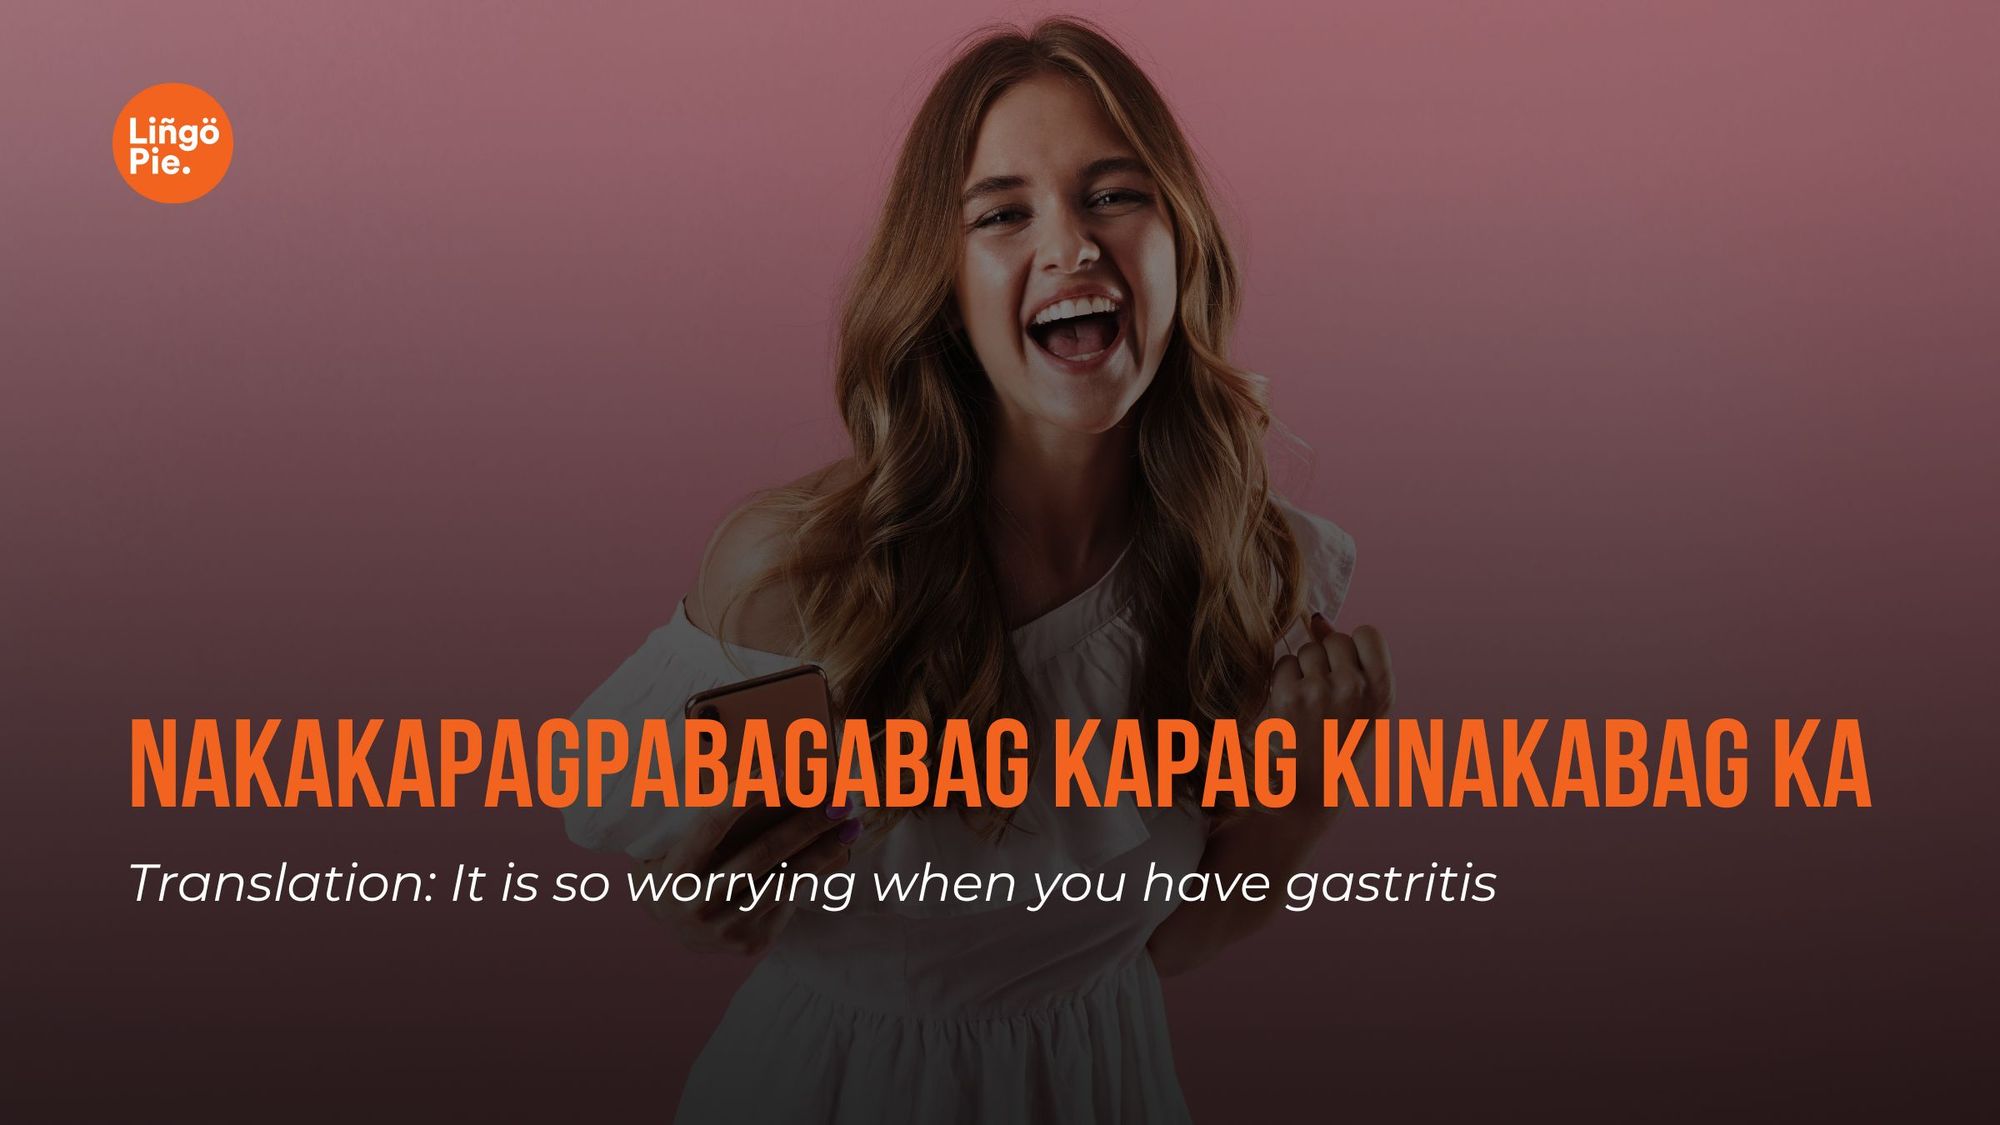 Nakakapagpabagabag kapag kinakabag ka - Tagalog Tongue Twisters